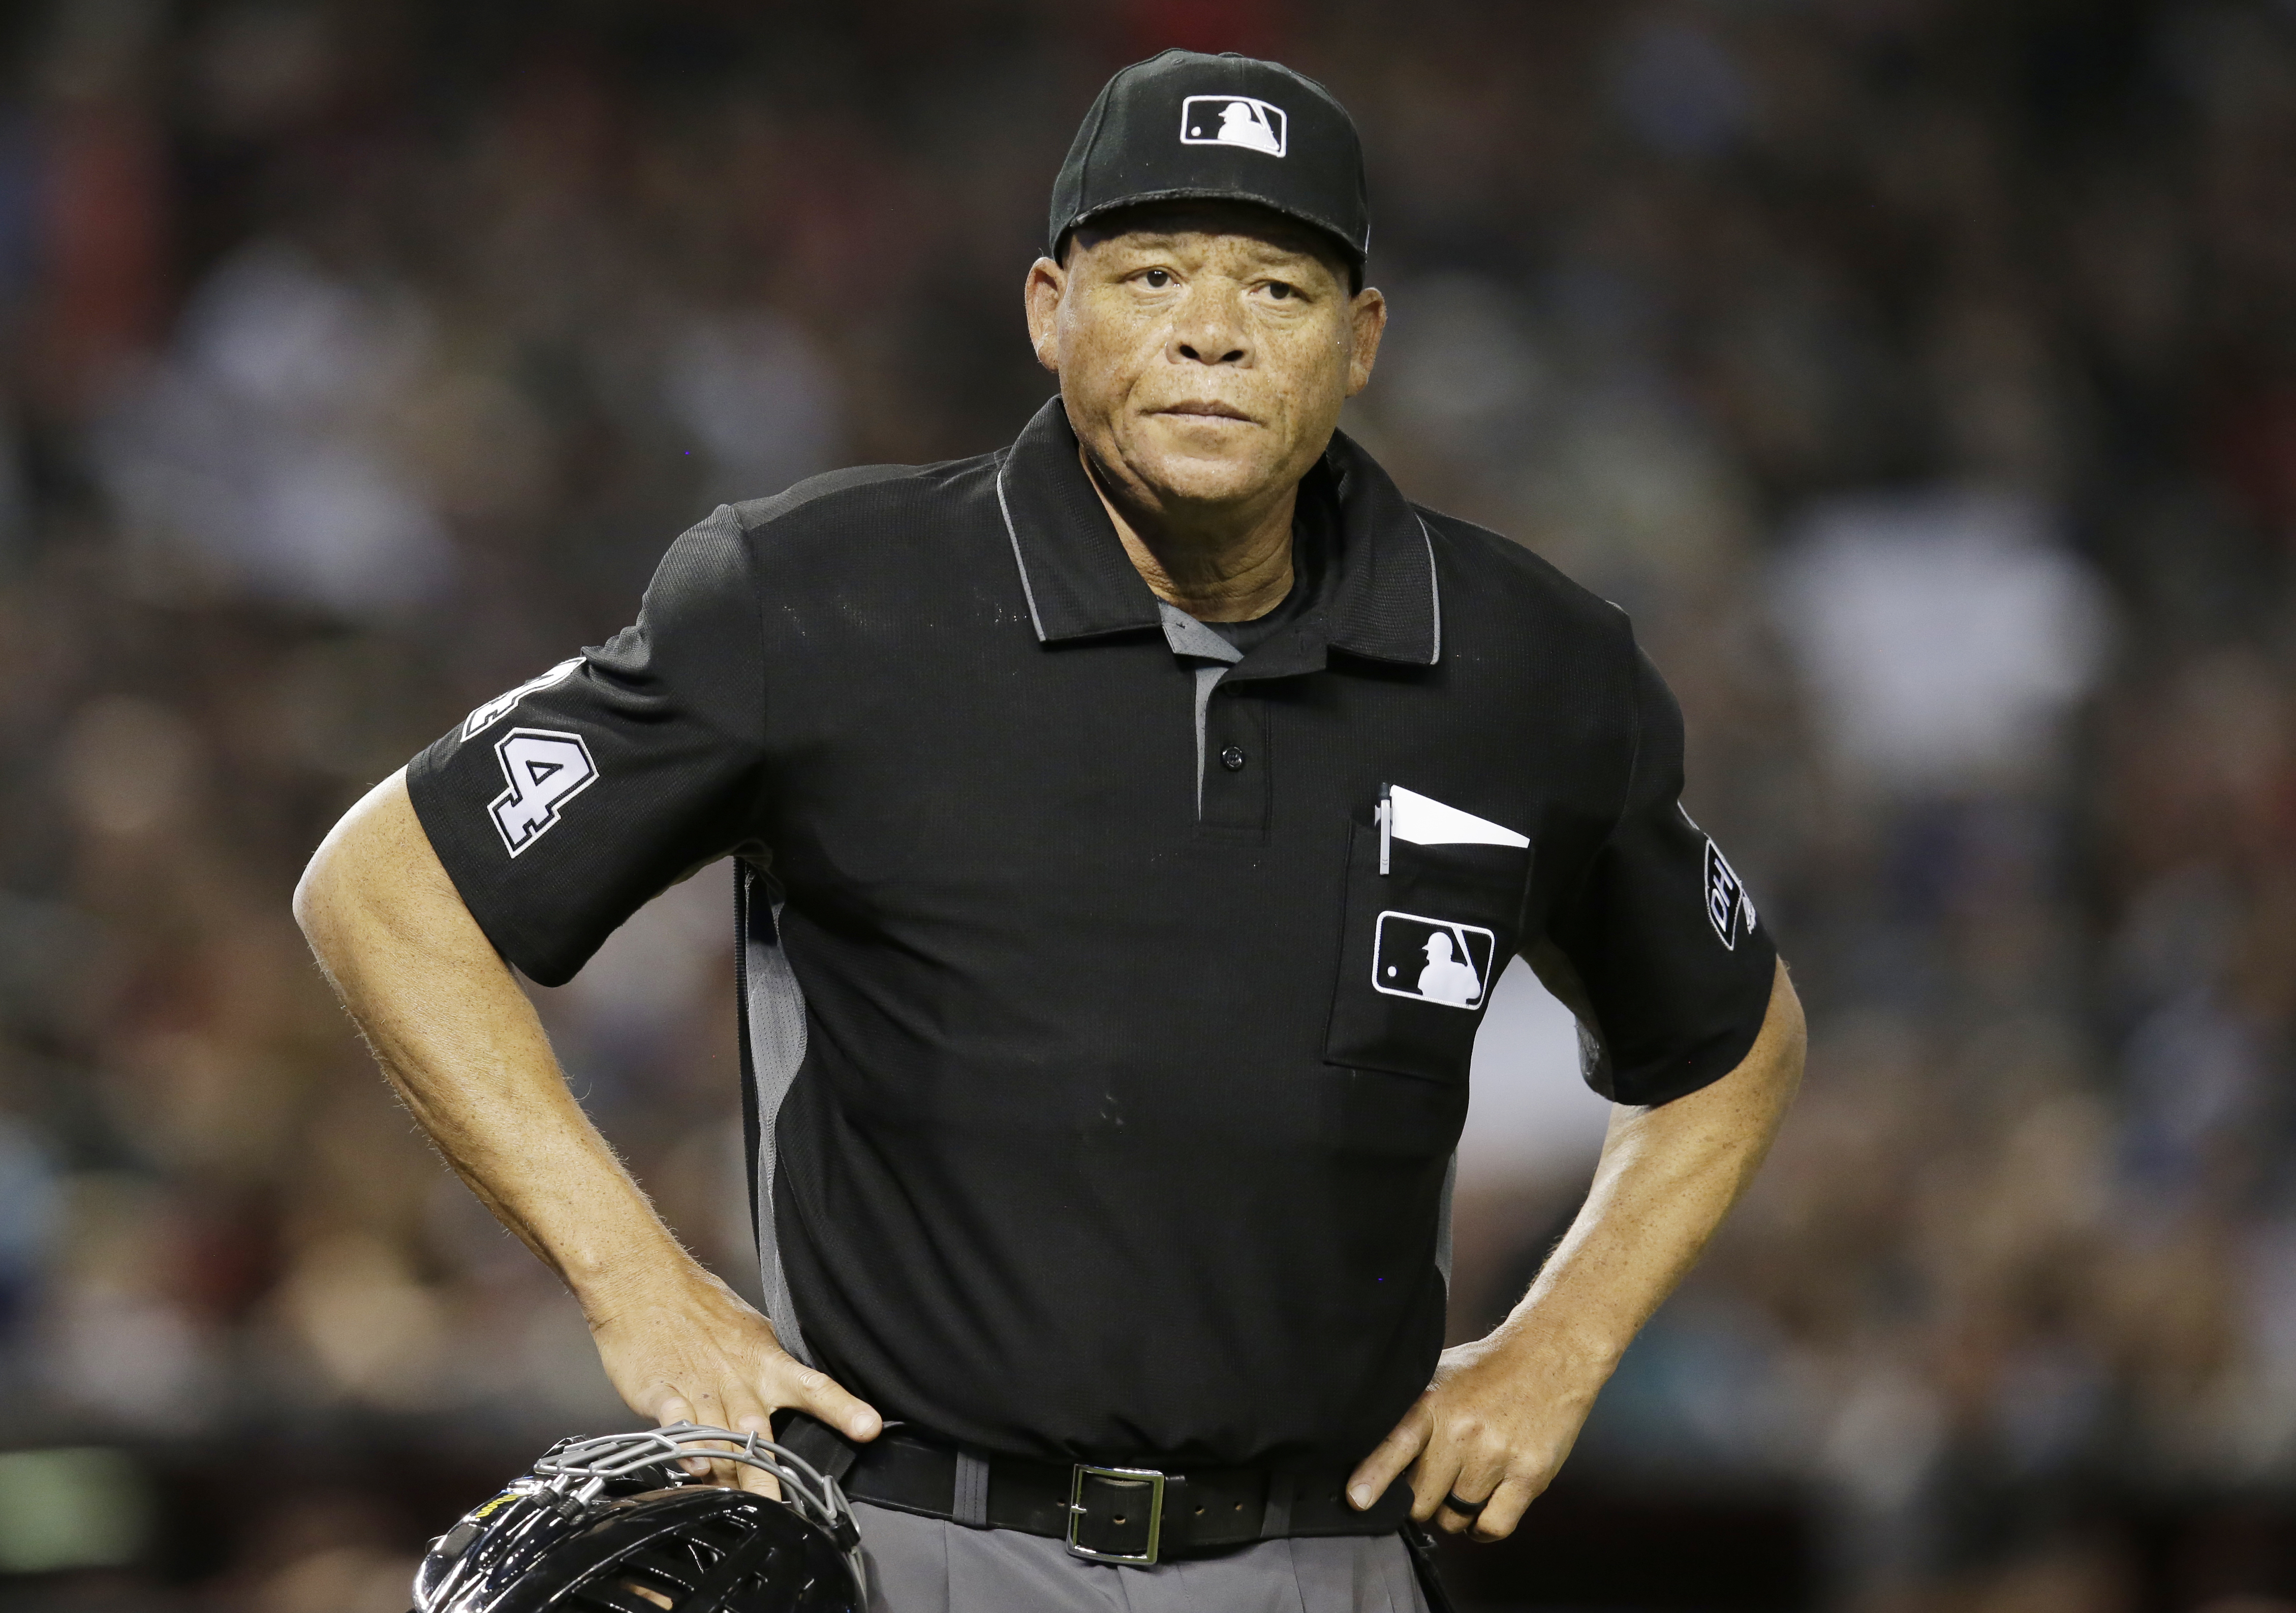 Ten MLB Umpires Retiring, Most Since 1999